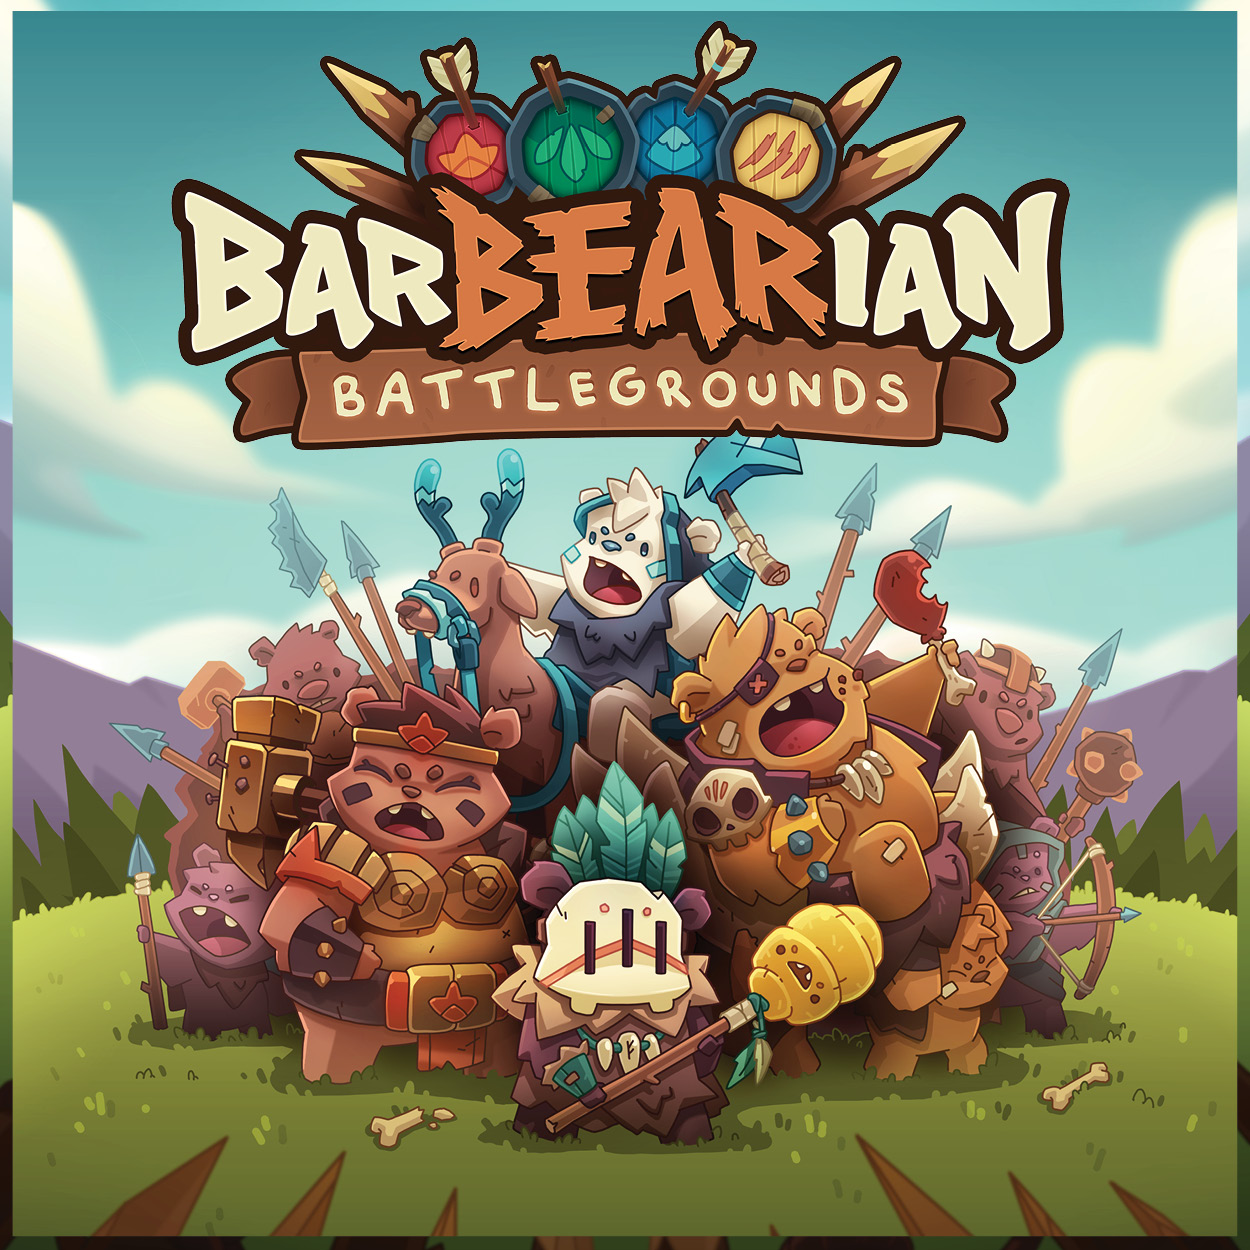 Barbarian games website